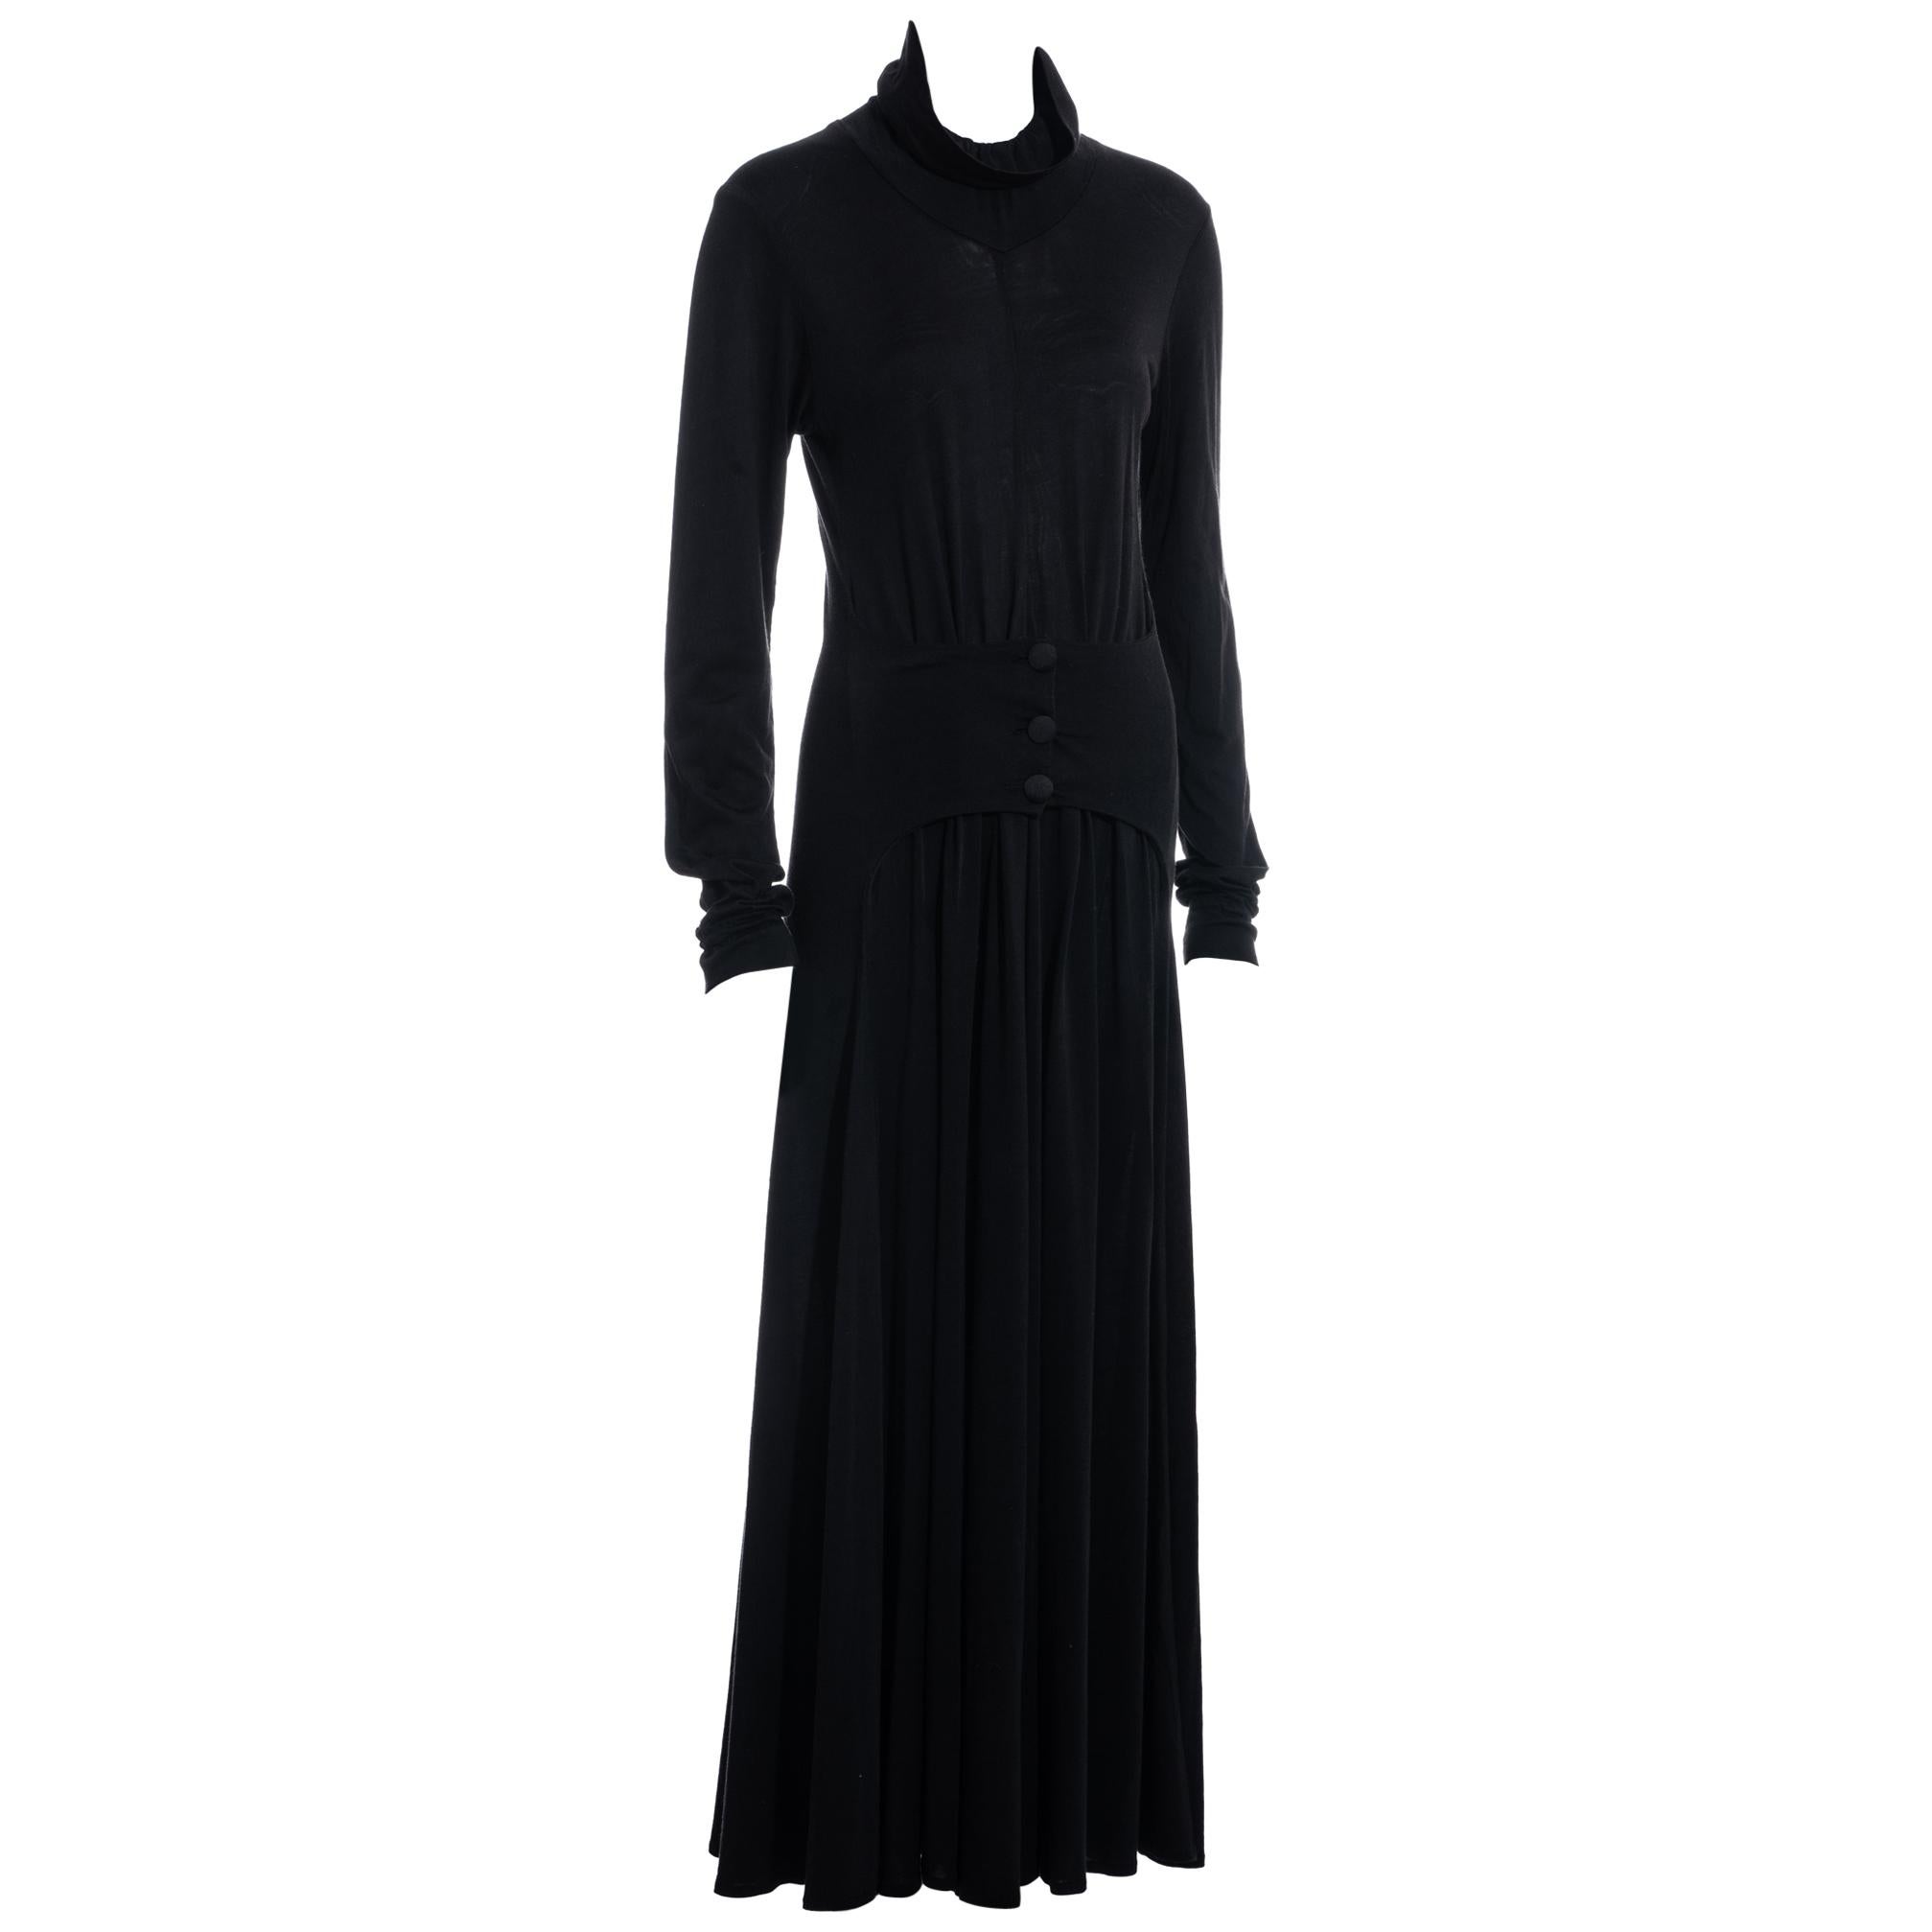 BodyMap black viscose cotton jersey maxi dress, c. 1980s